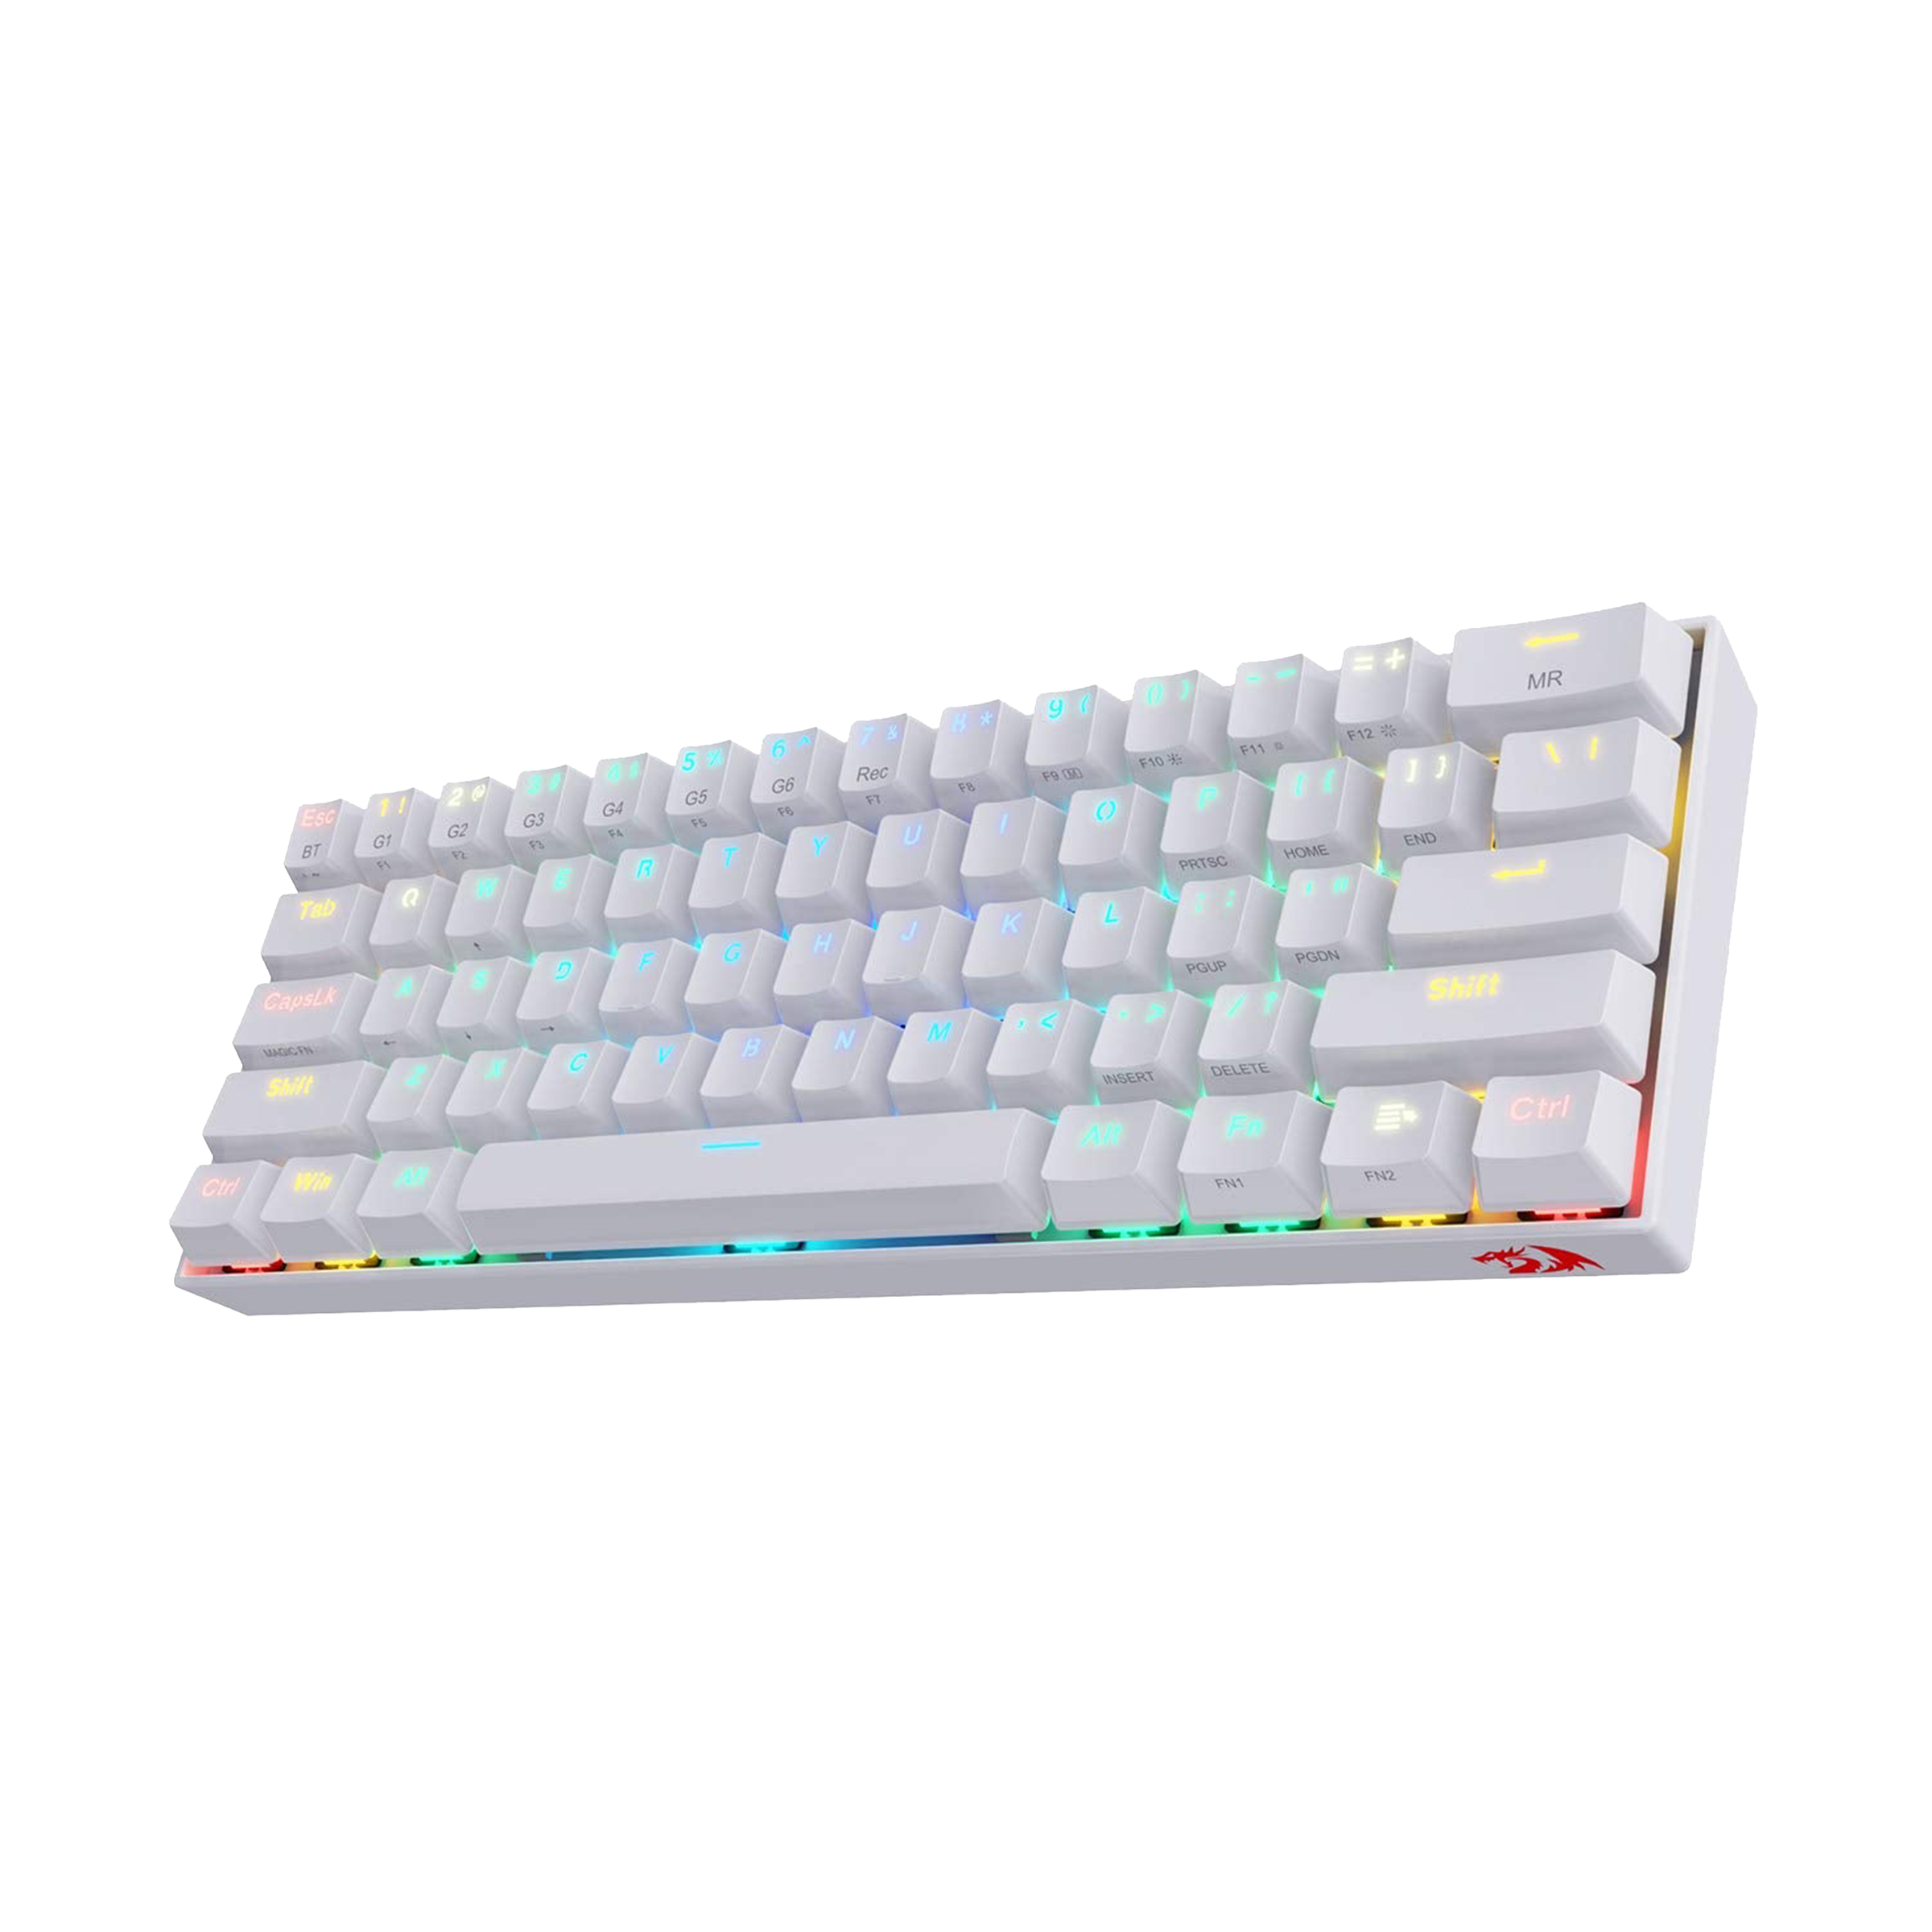 Redragon Draconic K530 Wired/Wireless Keyboard (RGB Backlight Brown Switch, White)_1